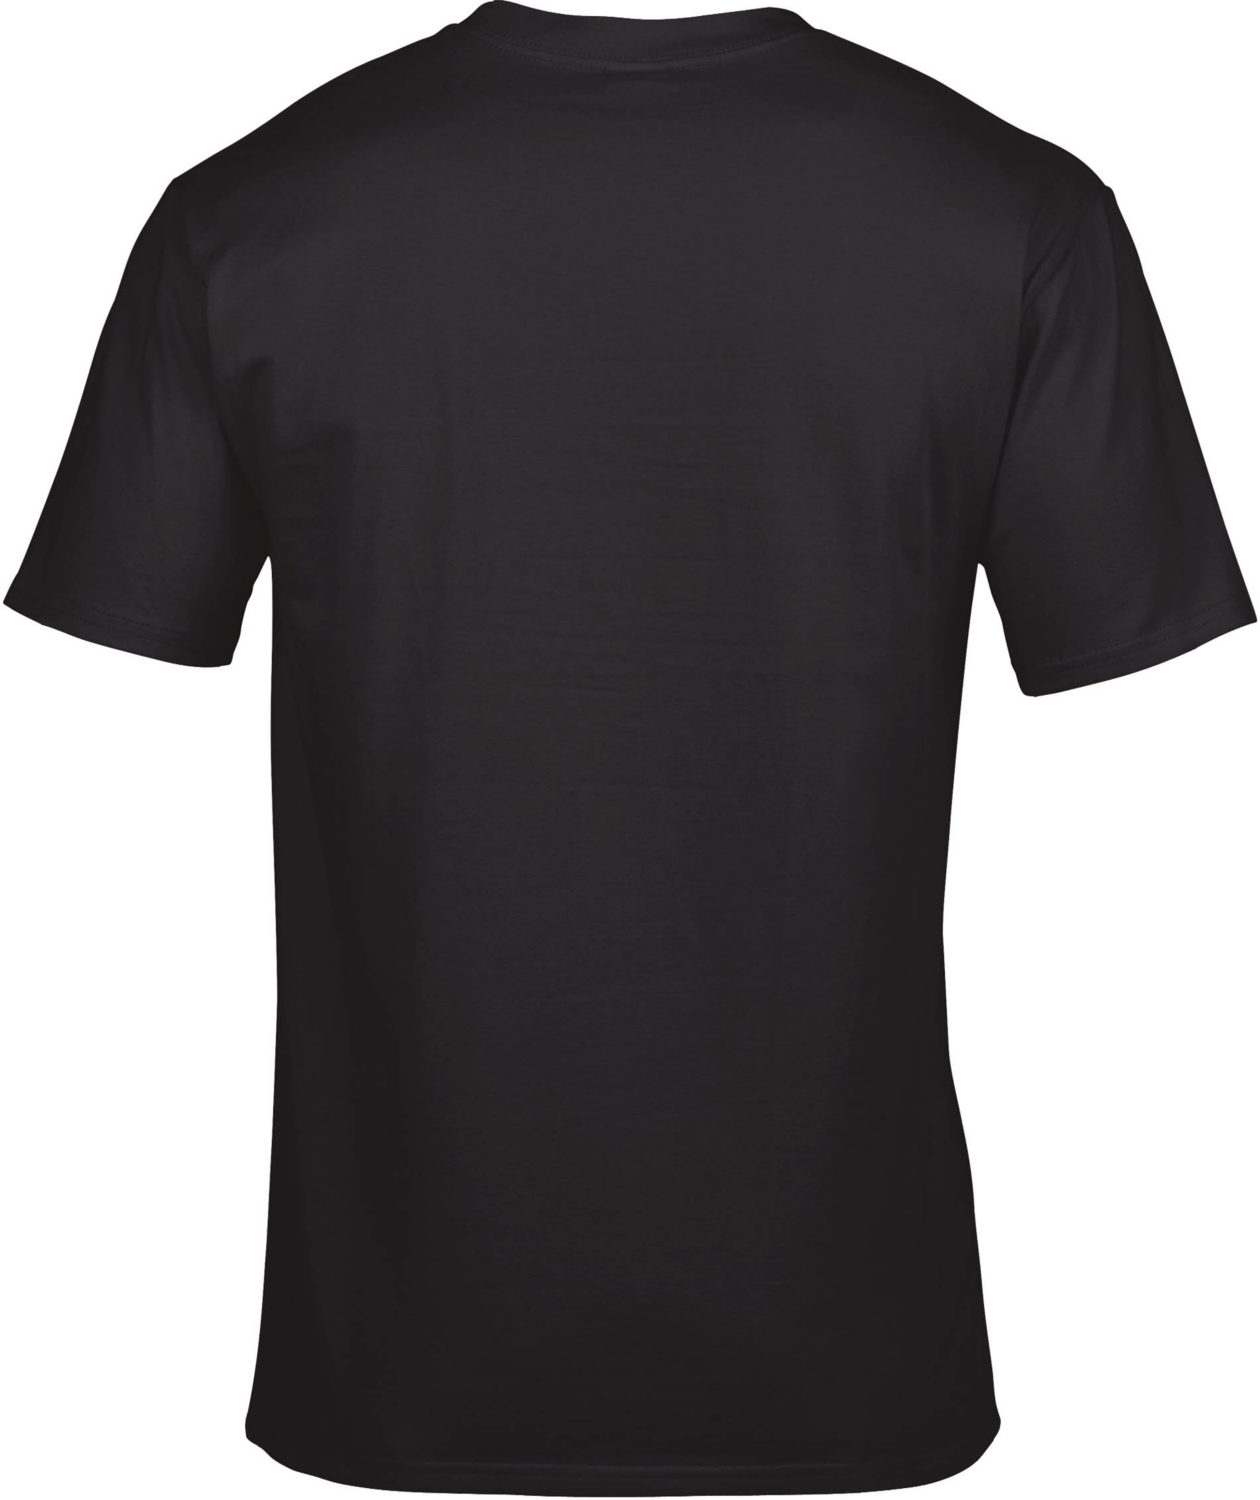  Tee-shirt GI400C - Noir 